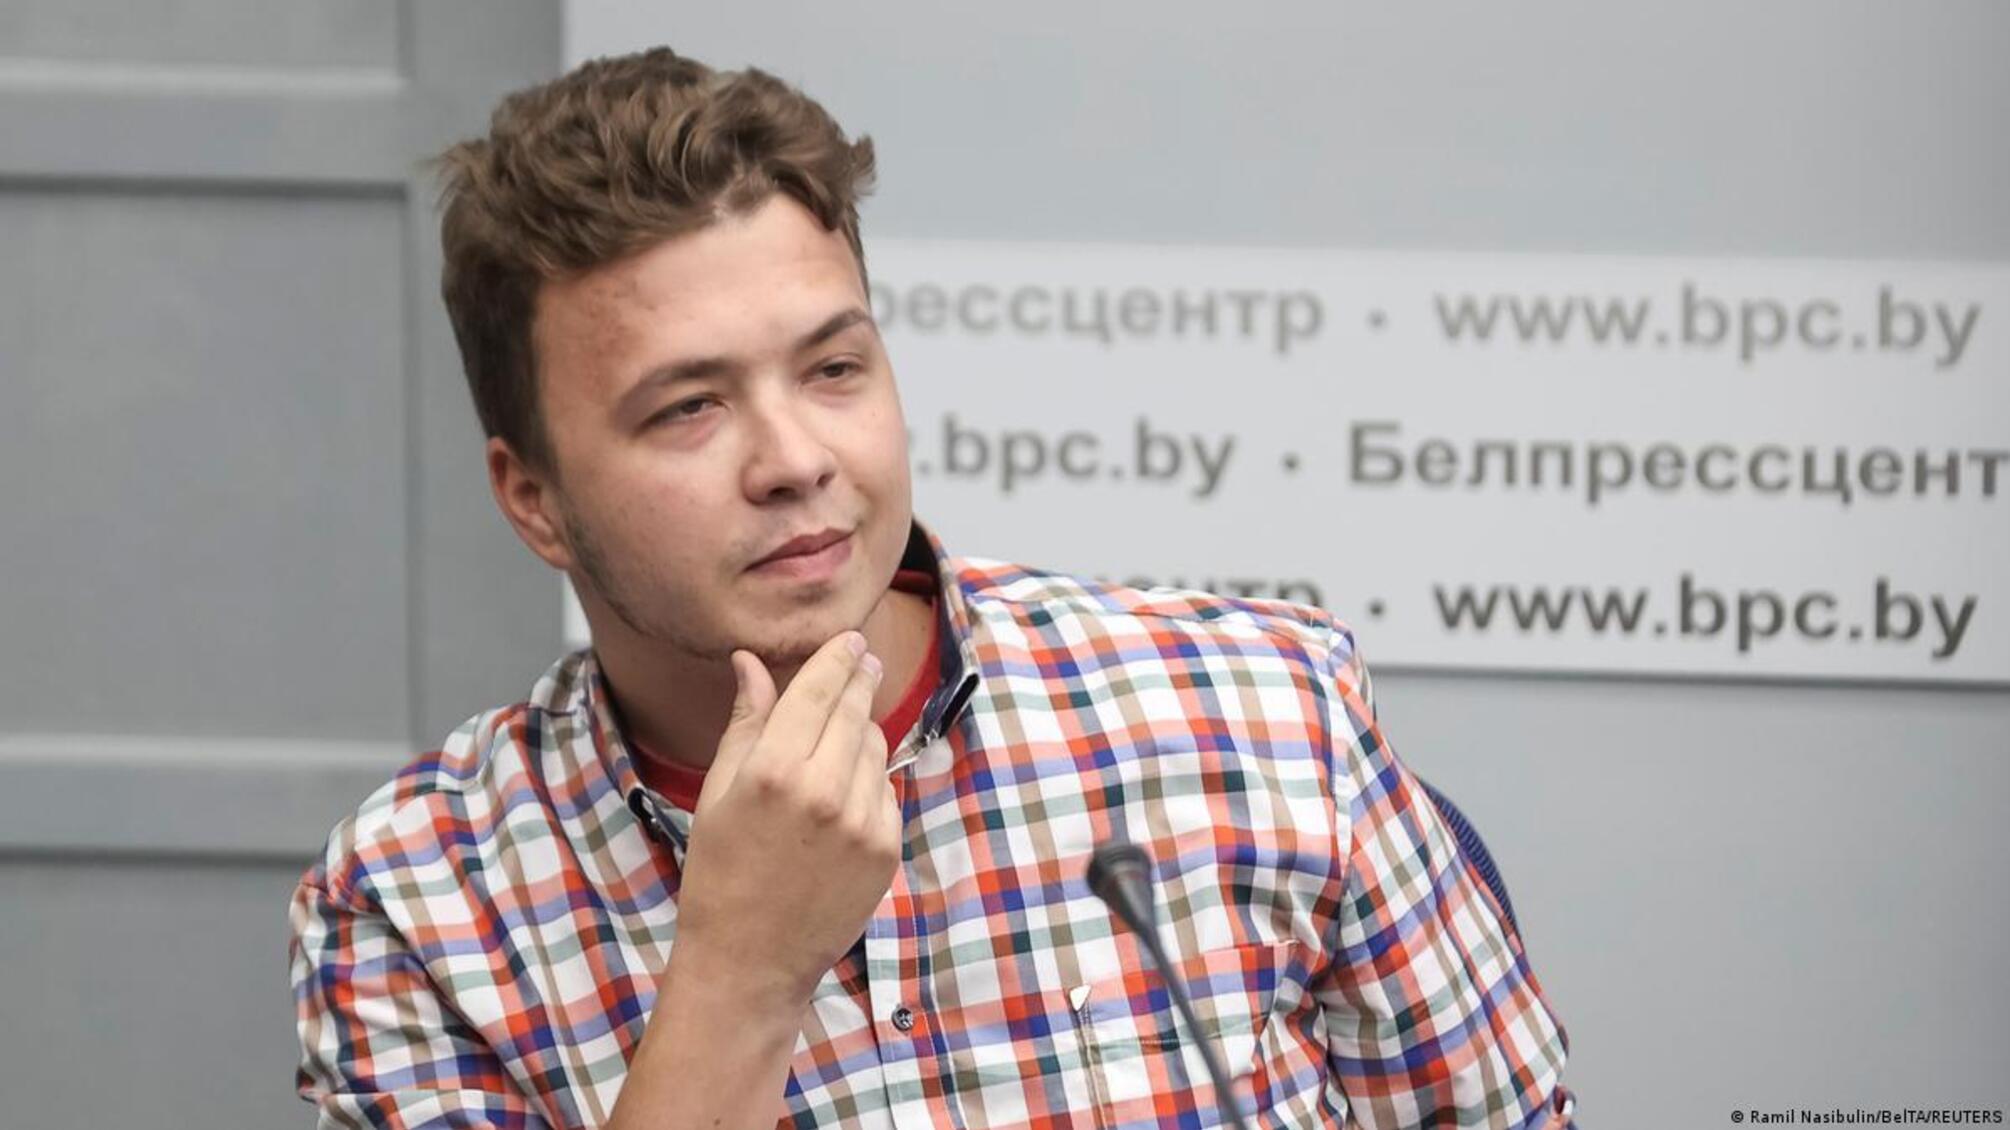 Неожиданно помиловали: в Беларуси освободили журналиста Протасевича